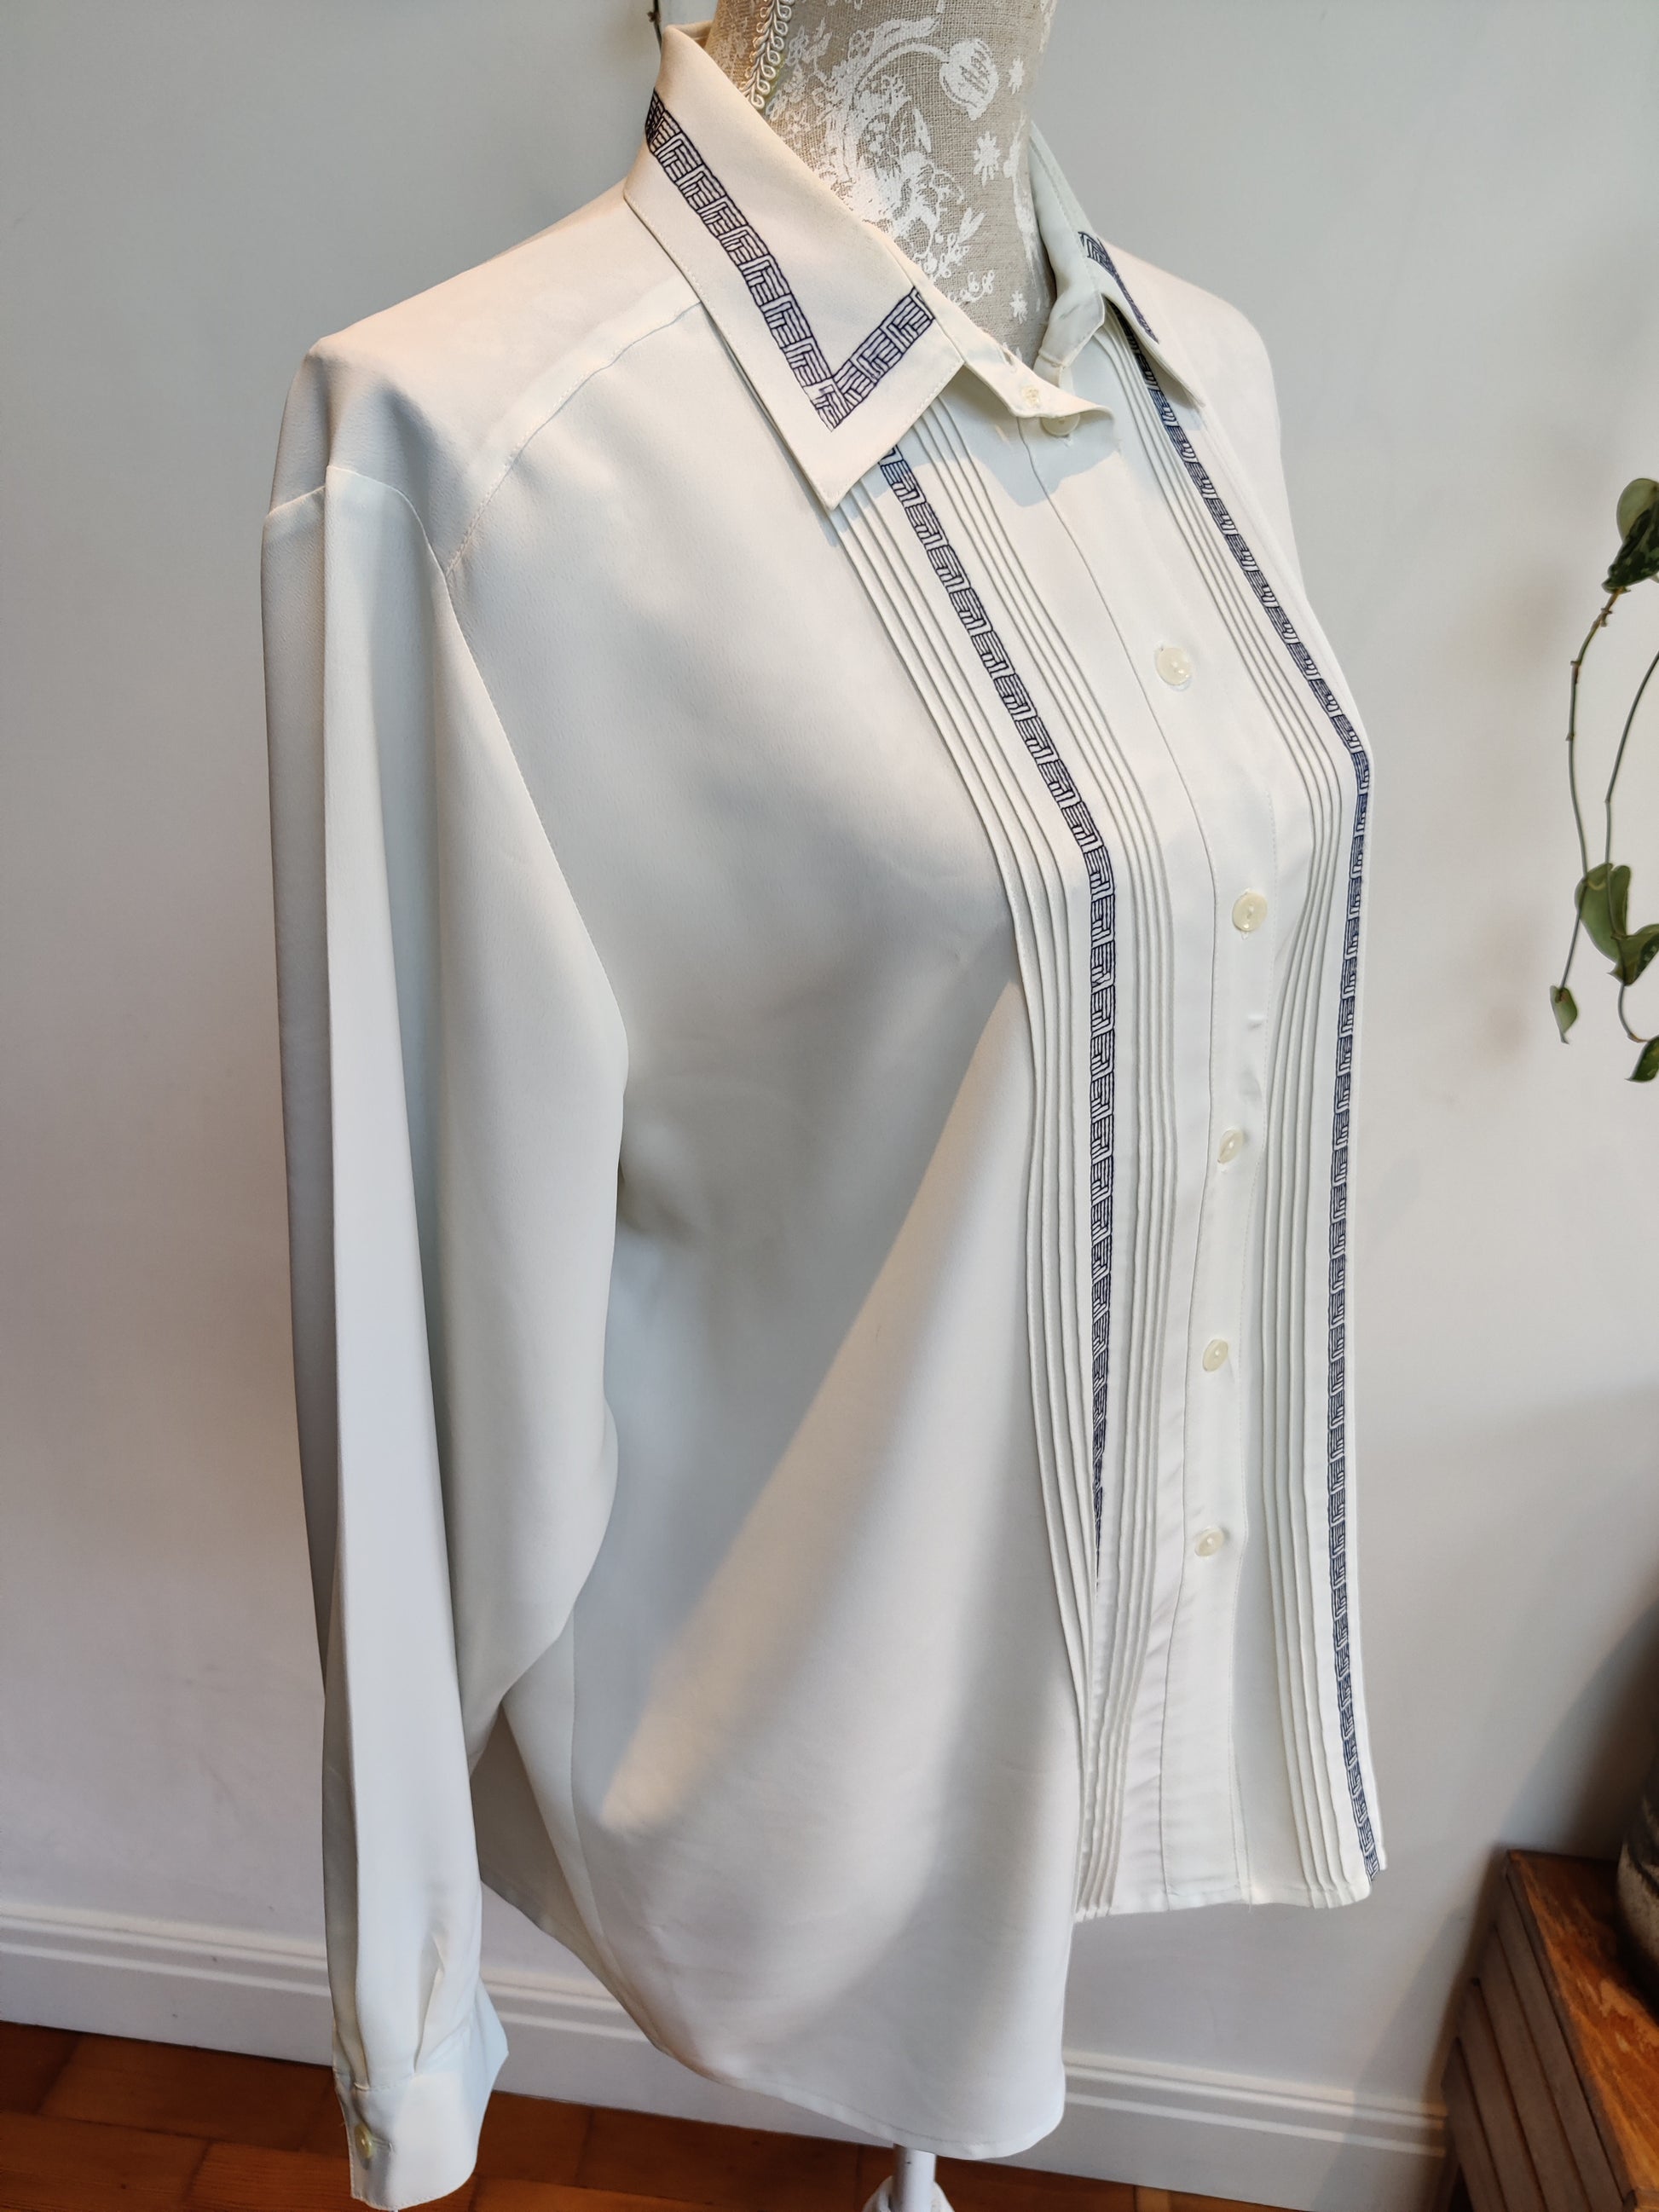 80s white blouse, size 16-18